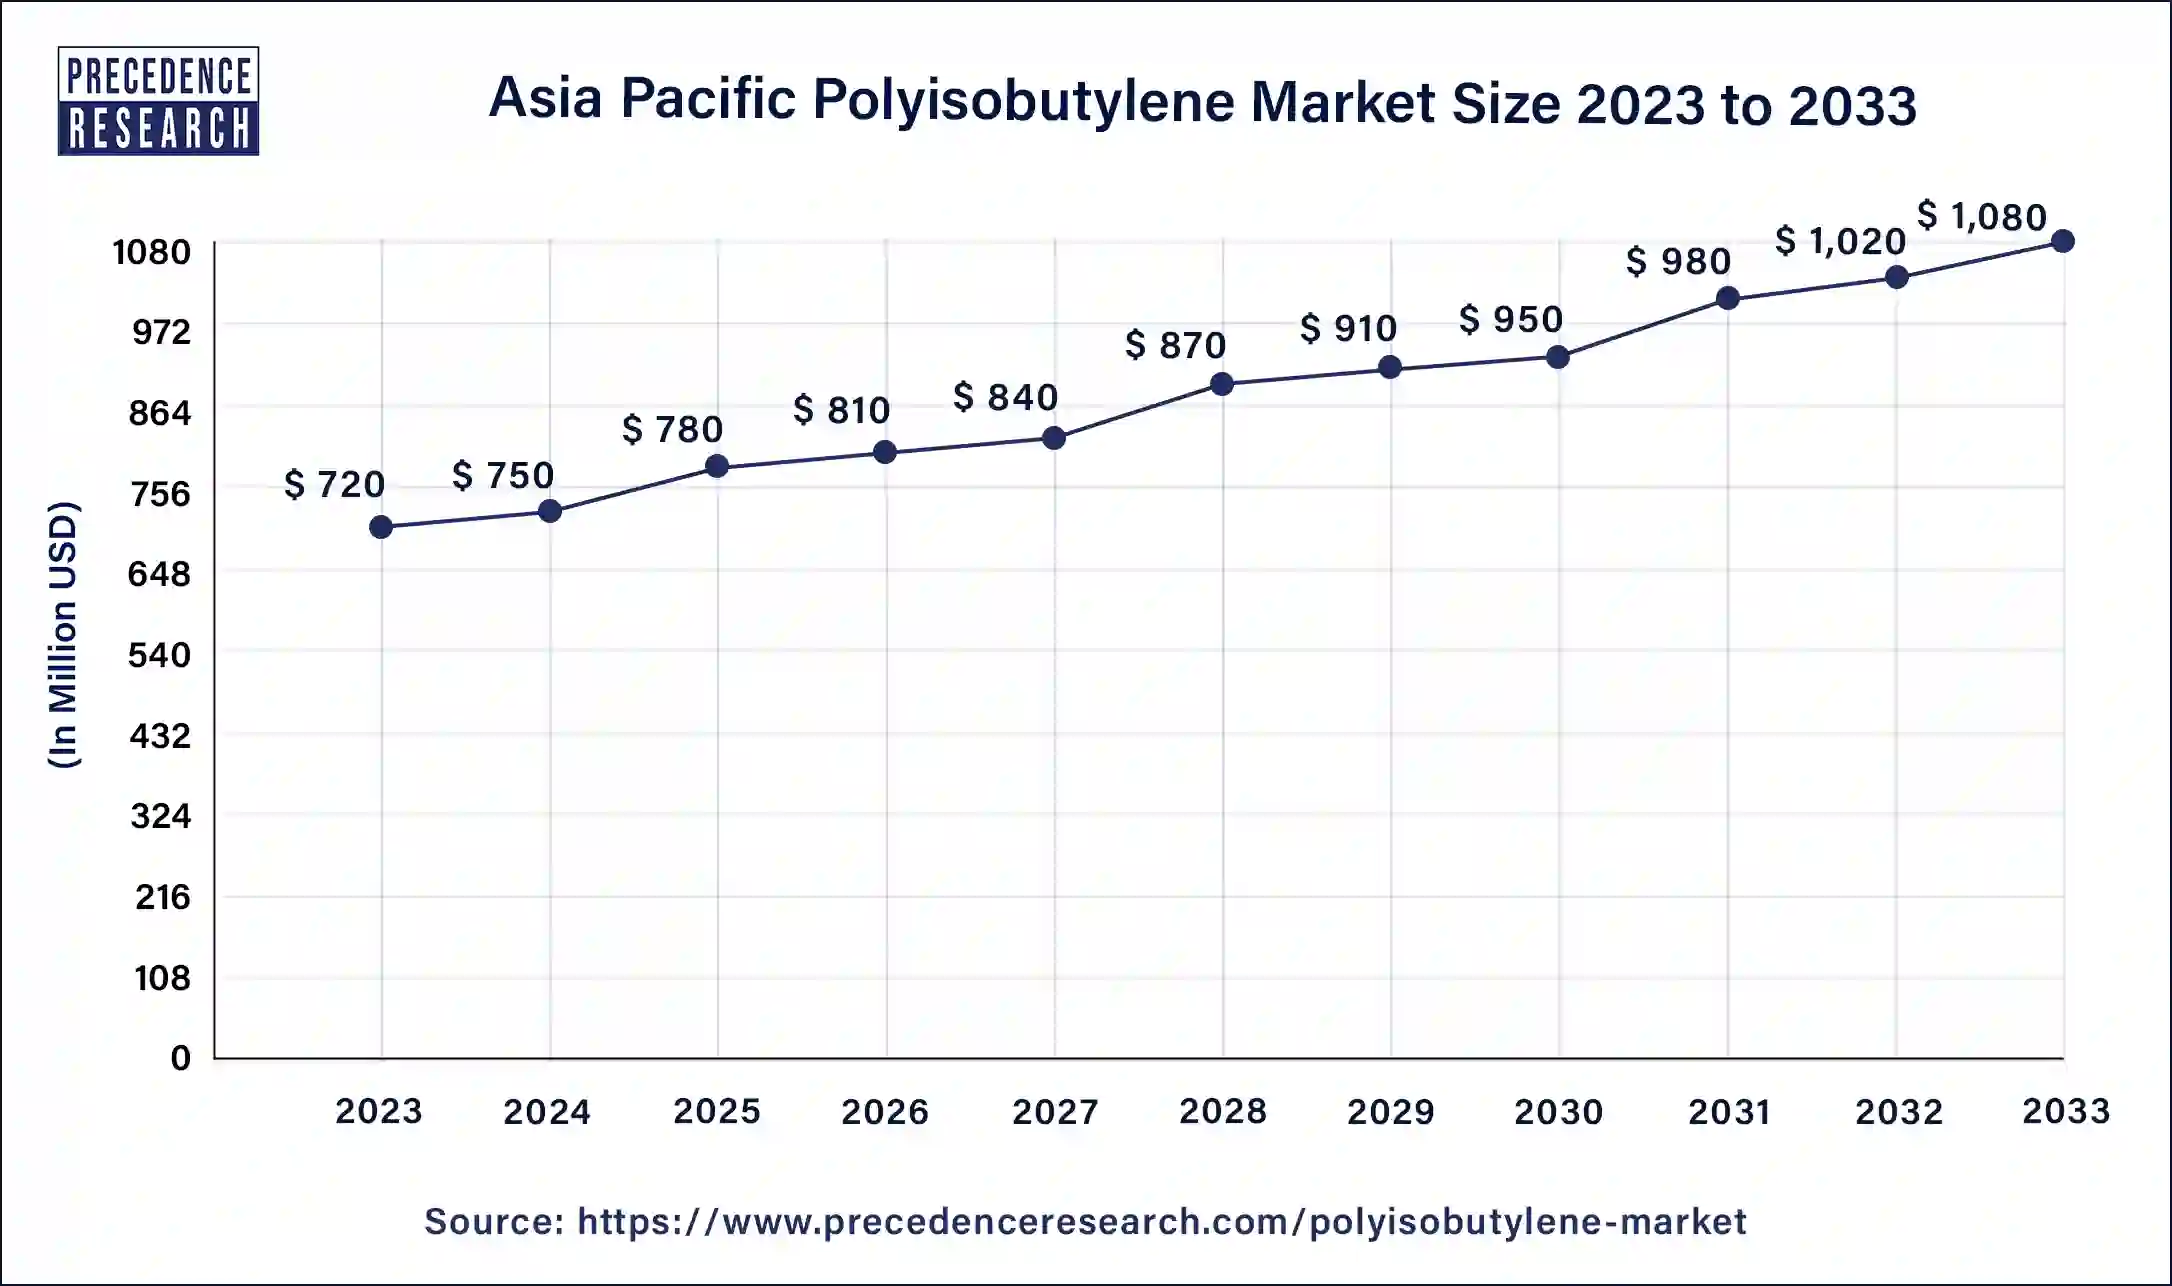 Asia Pacific Polyisobutylene Market Size 2024 to 2033